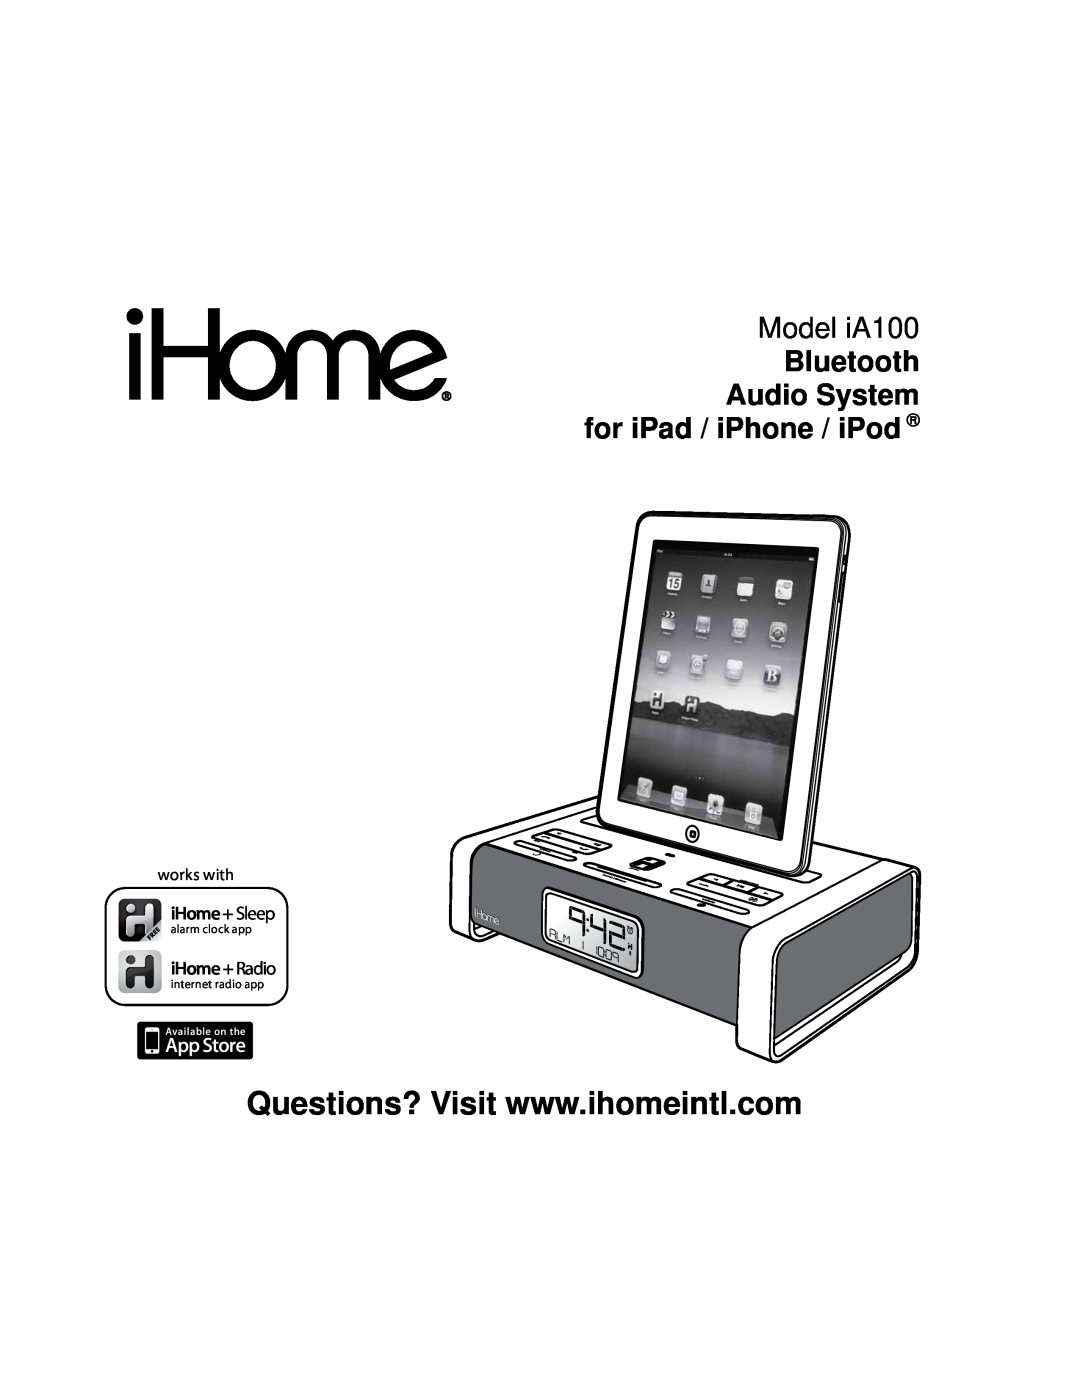 iHome manual Model iA100, Bluetooth Audio System for iPad / iPhone / iPod, iHome + Sleep, iHome + Radio, works with 